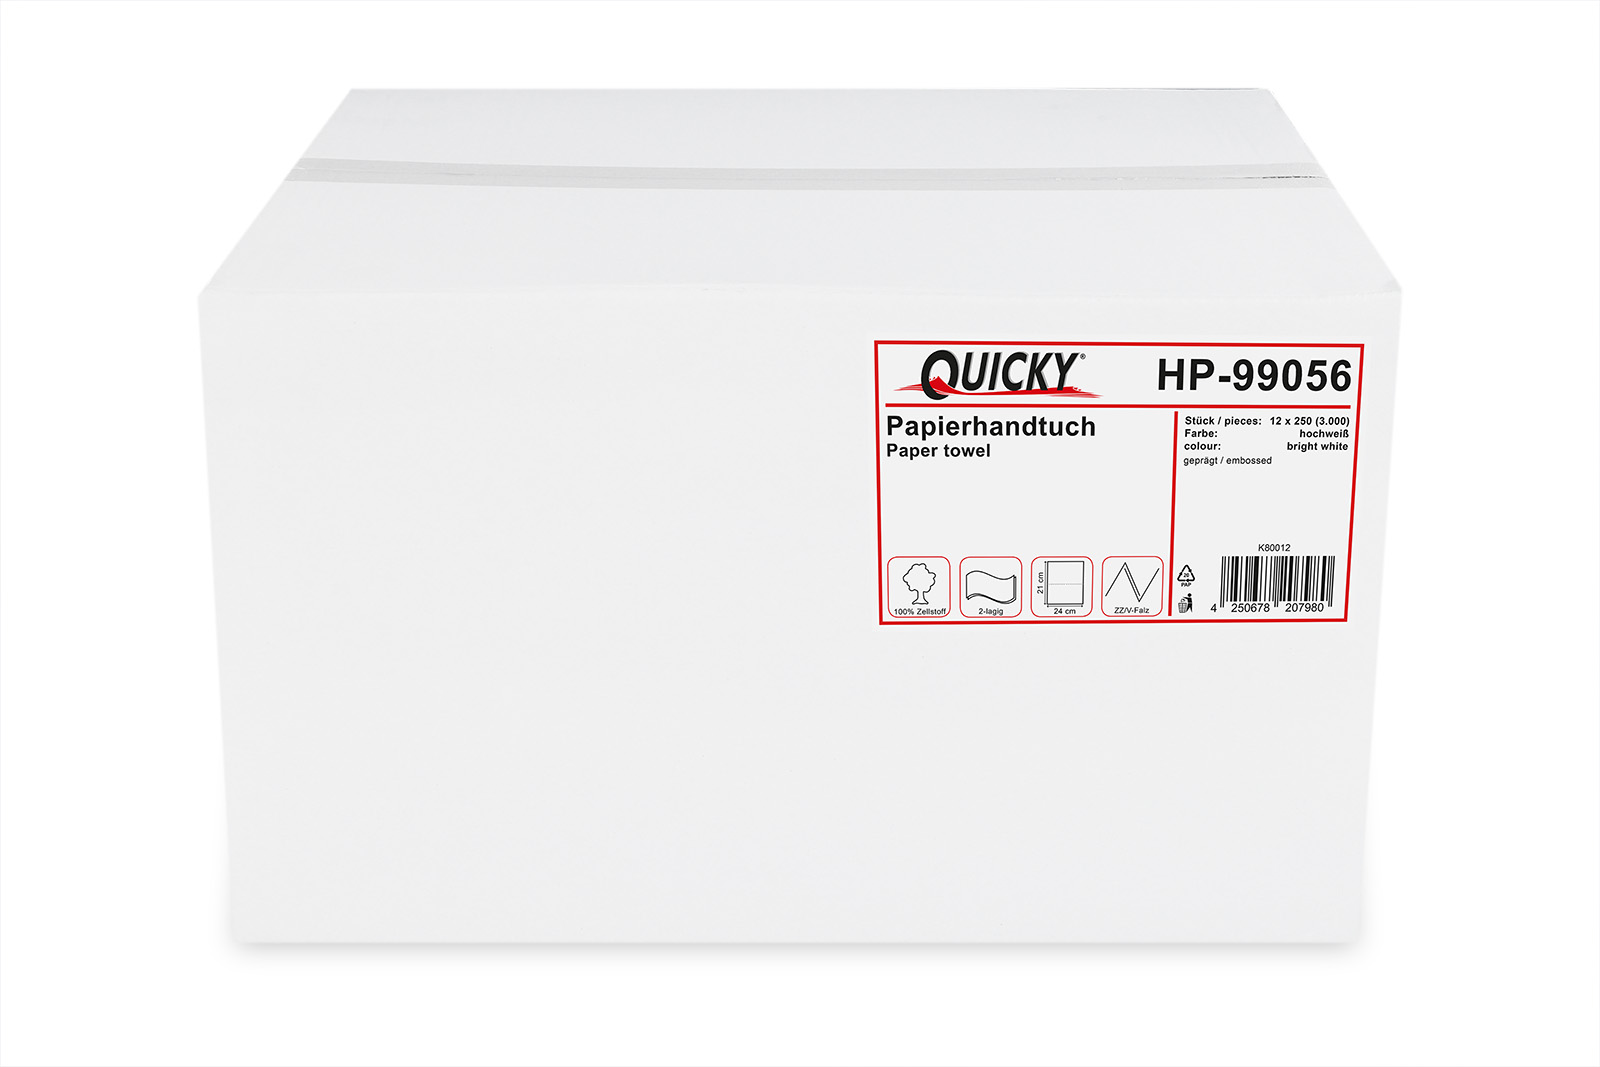 Quicky Papierhandtuch HP-99056 2-lagig ZZ-Falz 24x21 cm 6000 Blatt hochweiß 